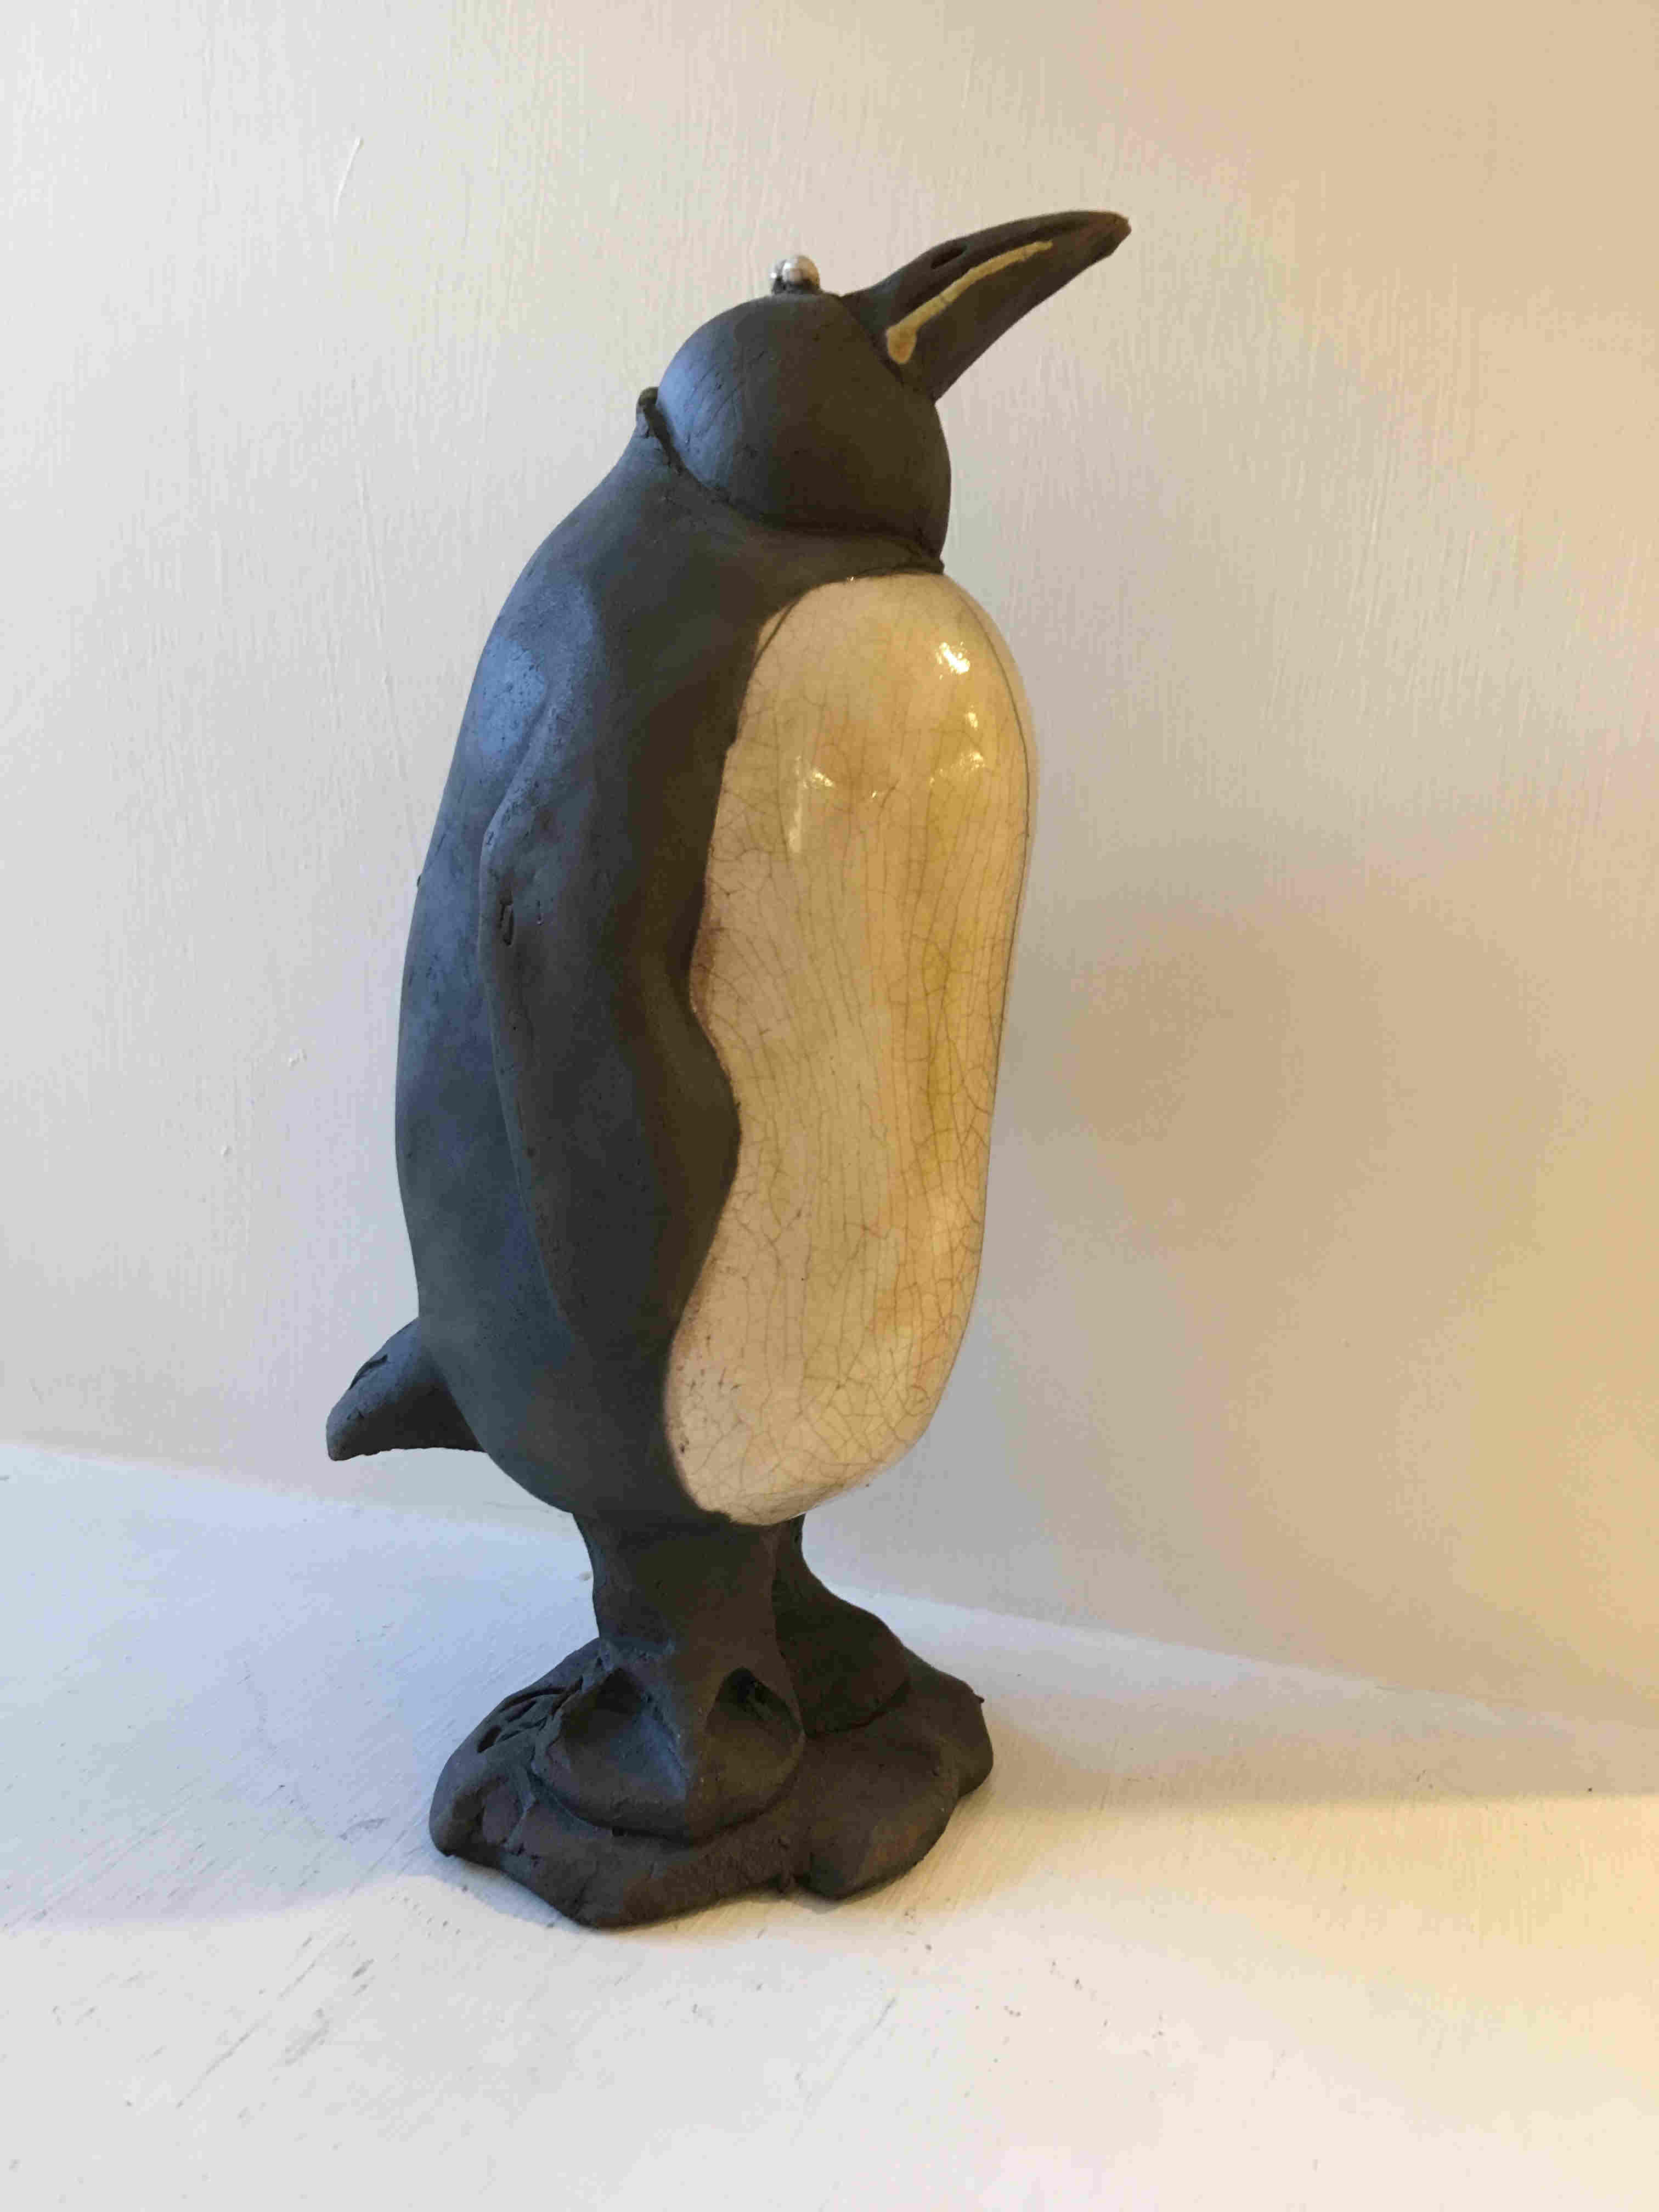 'Penguin' by artist Alex Johannsen